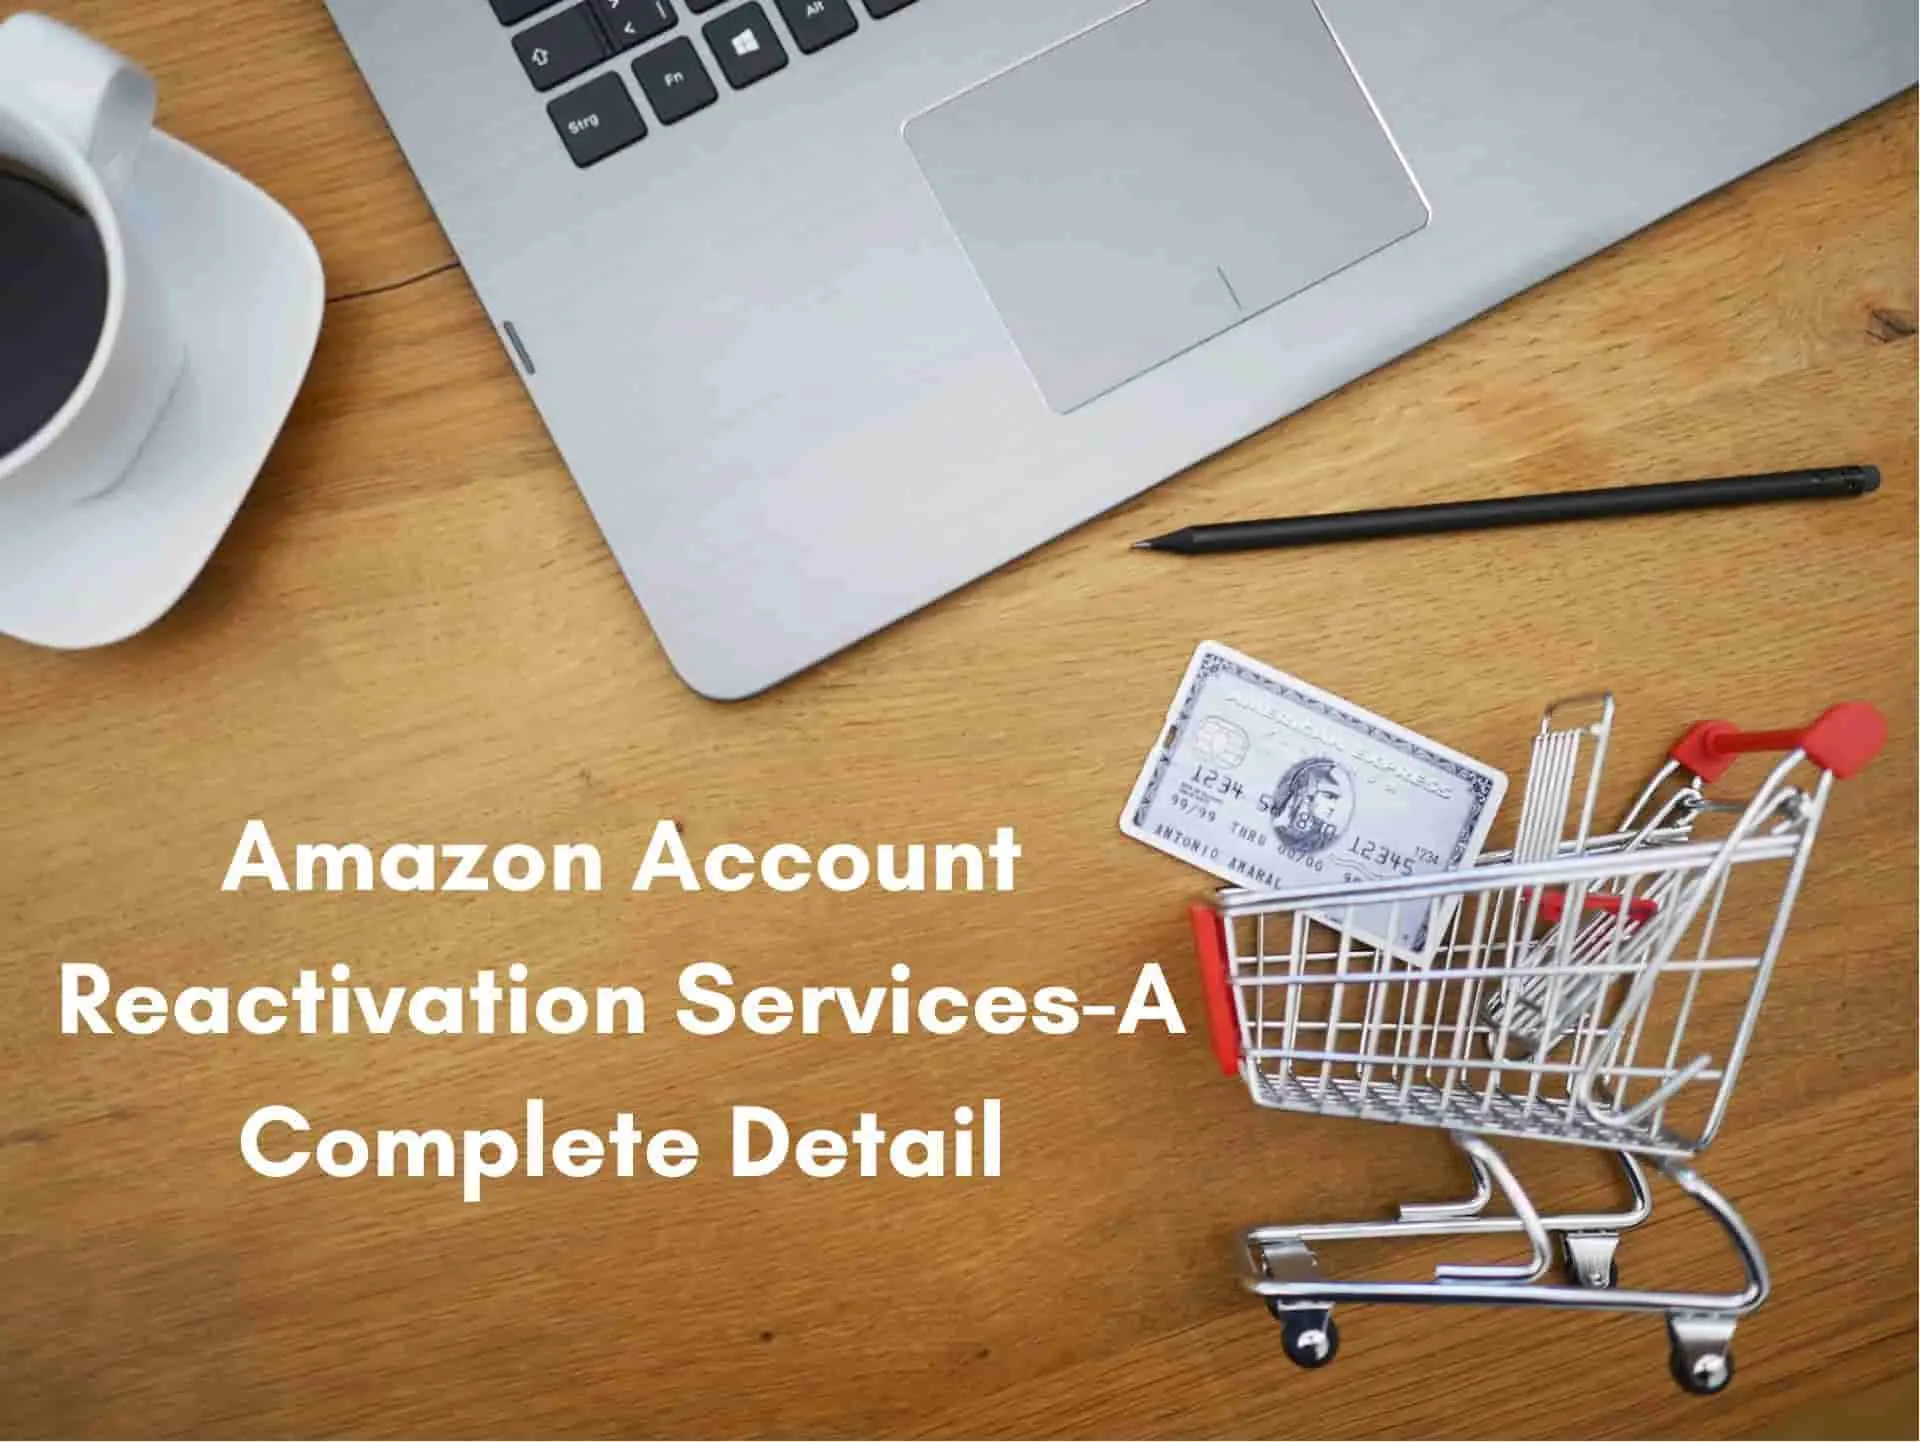 Amazon Account Reactivation Services